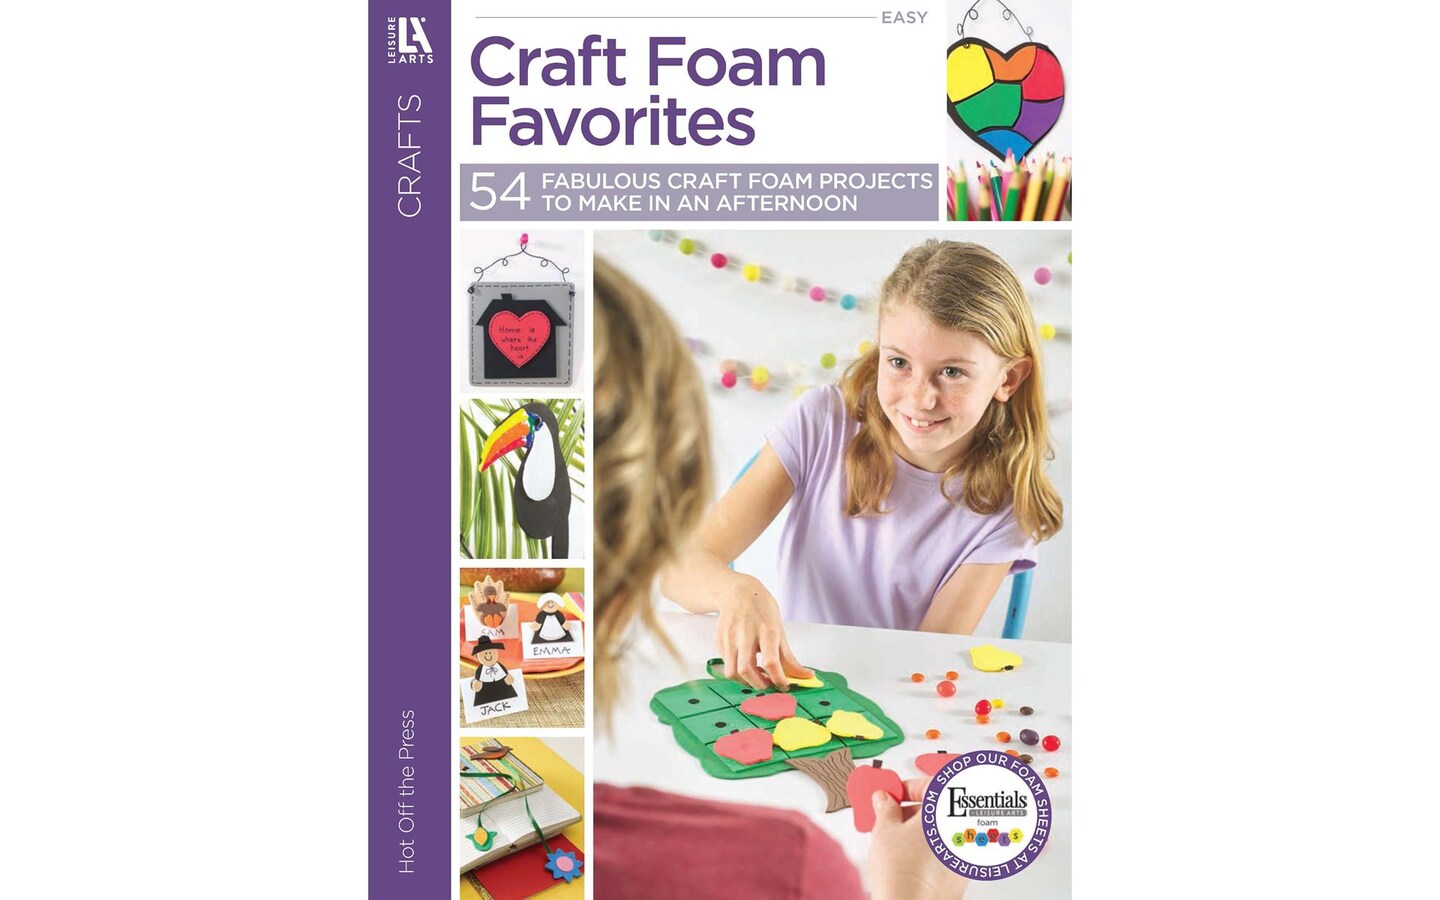 Leisure Arts Craft Foam Favorites Crafting Book